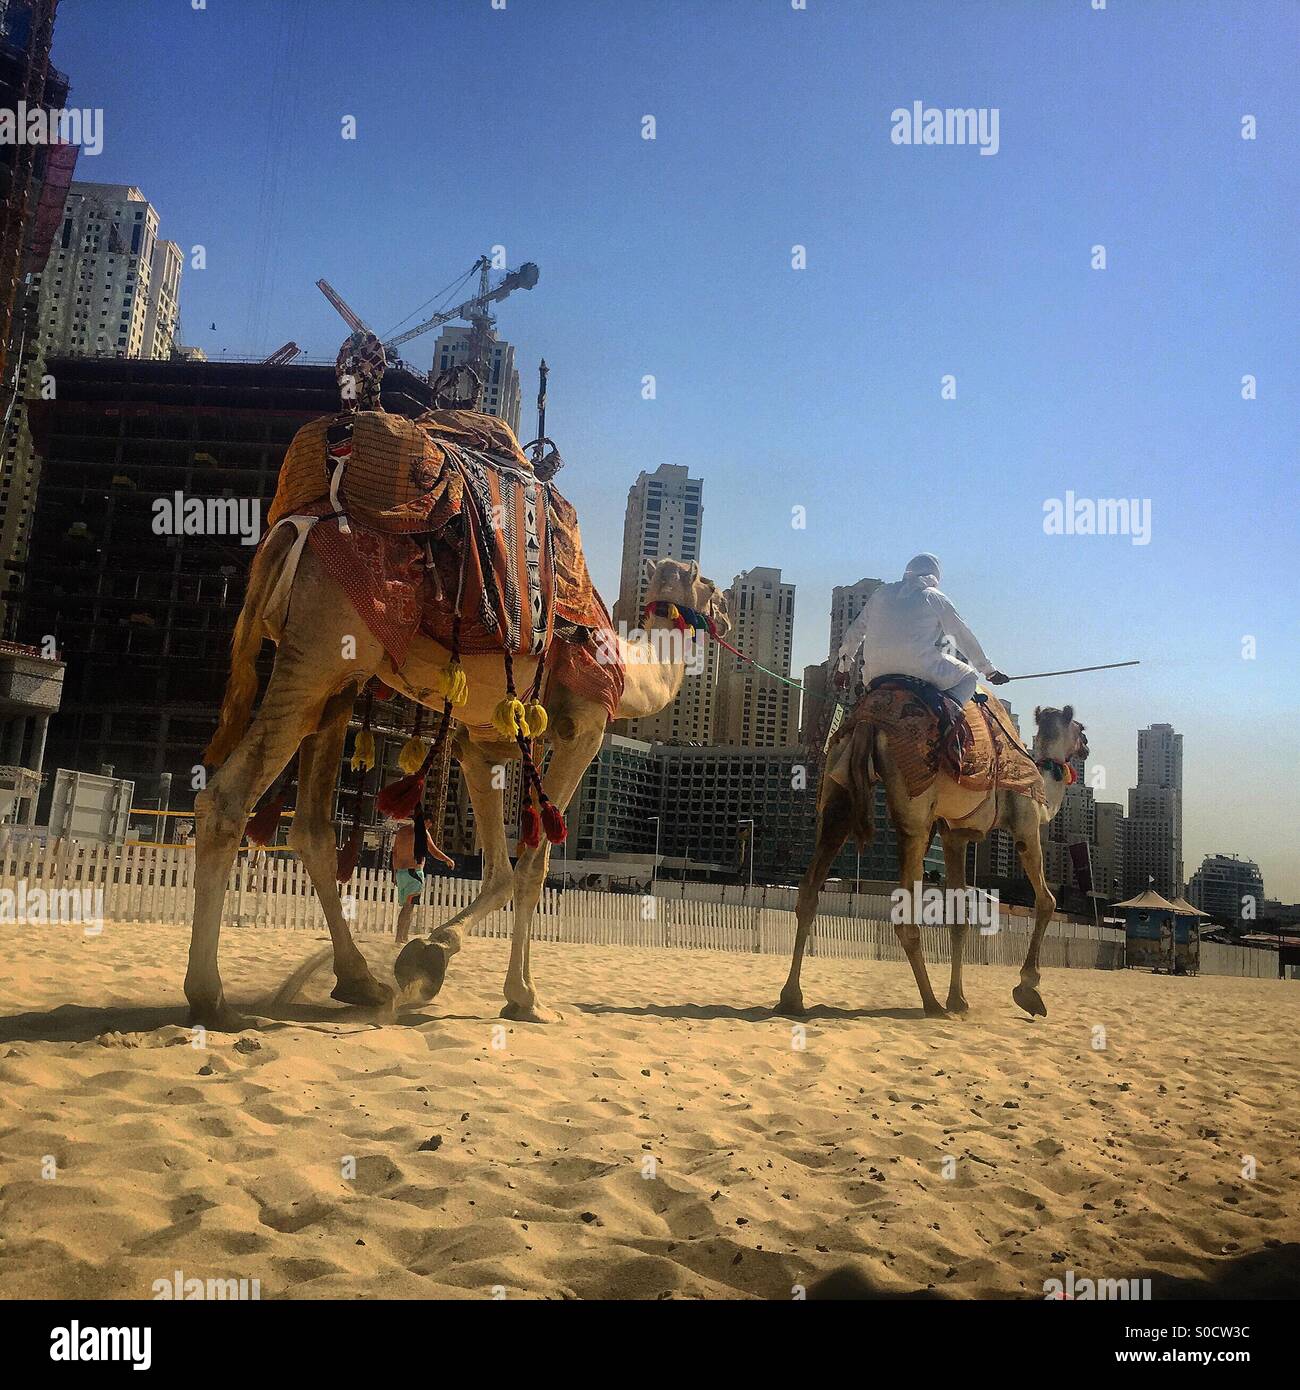 Camel, Dubai Stock Photo